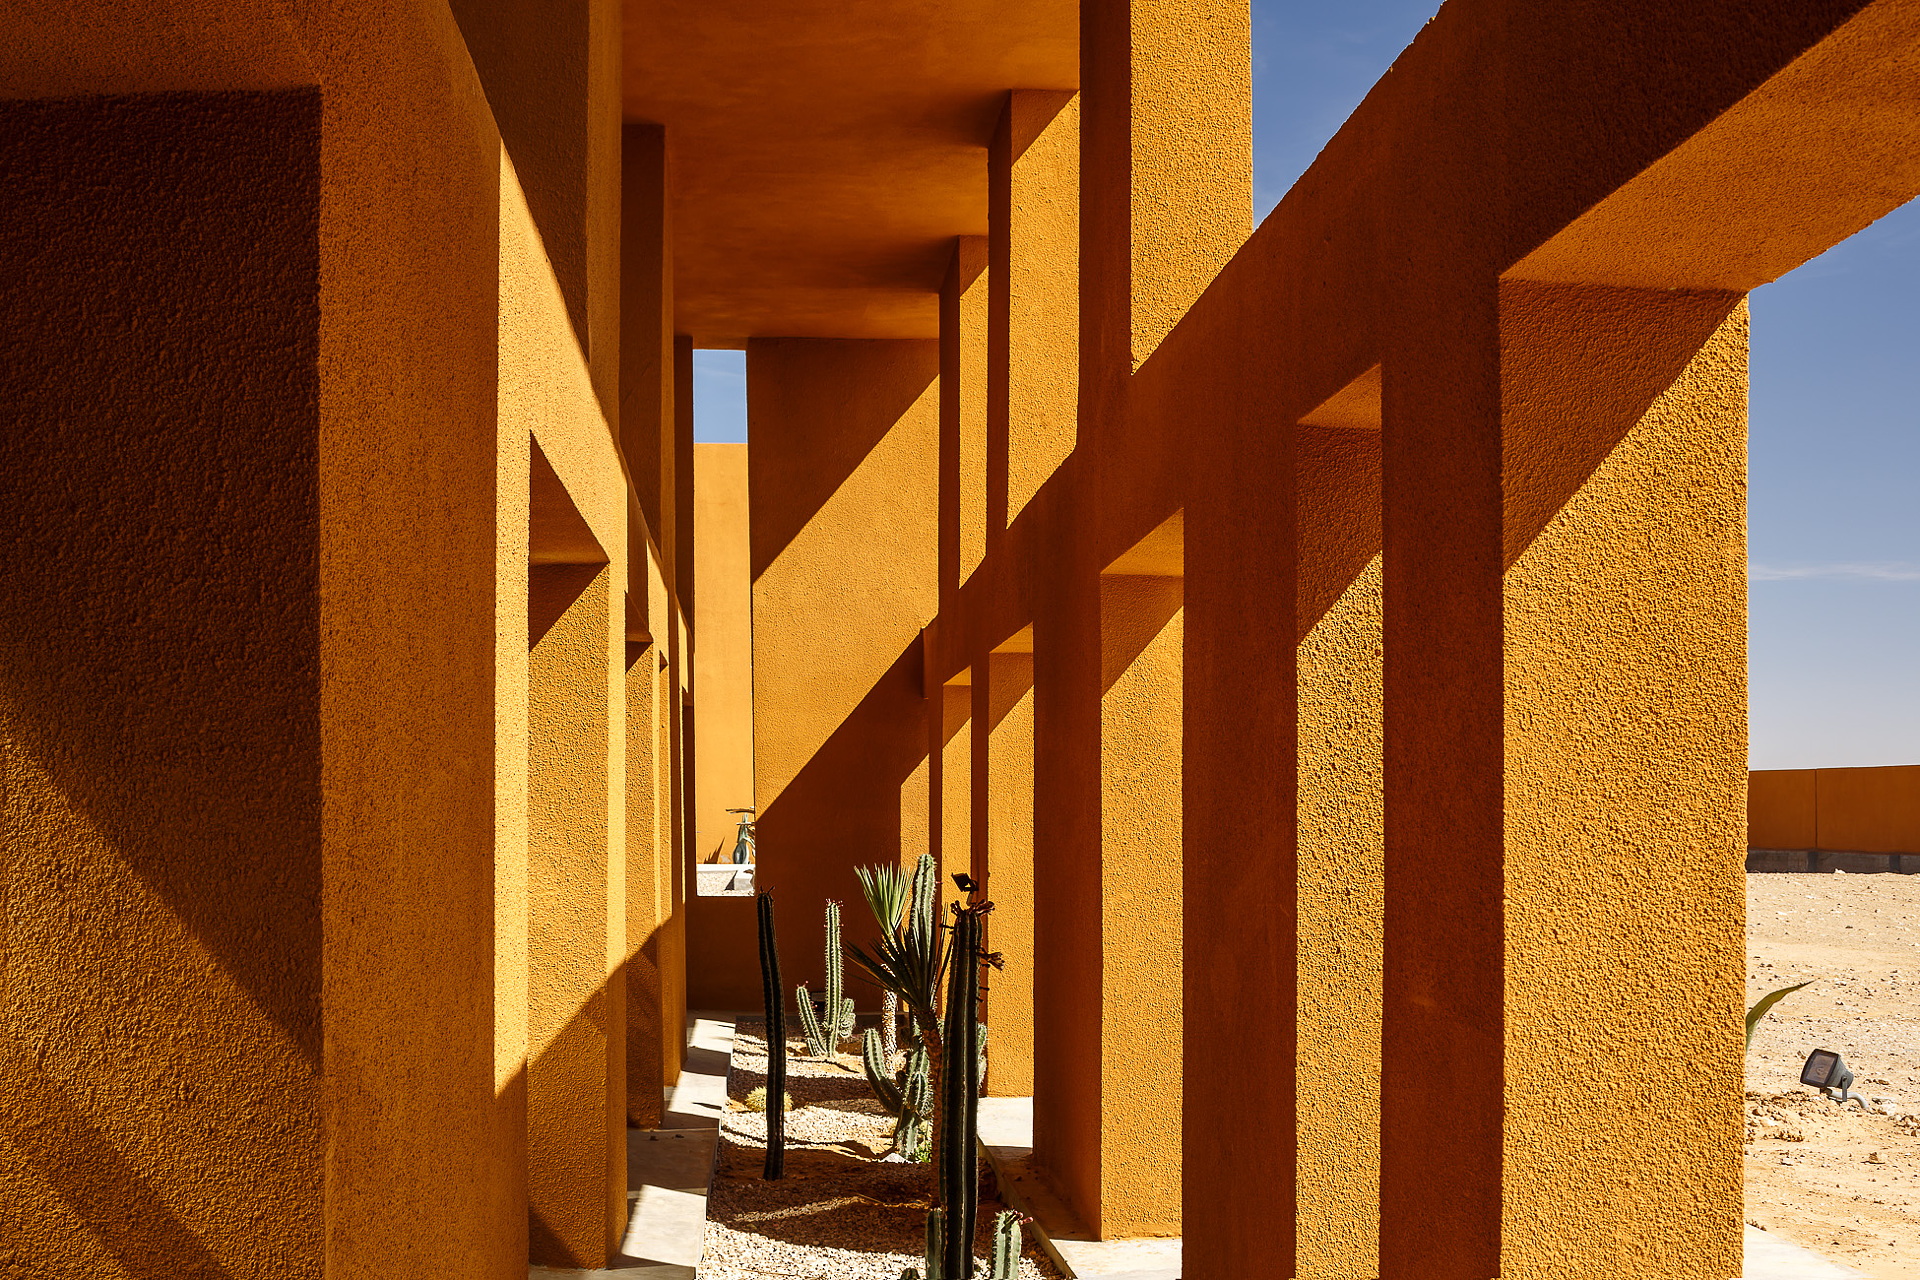 4 Seasons Architecture: Desert